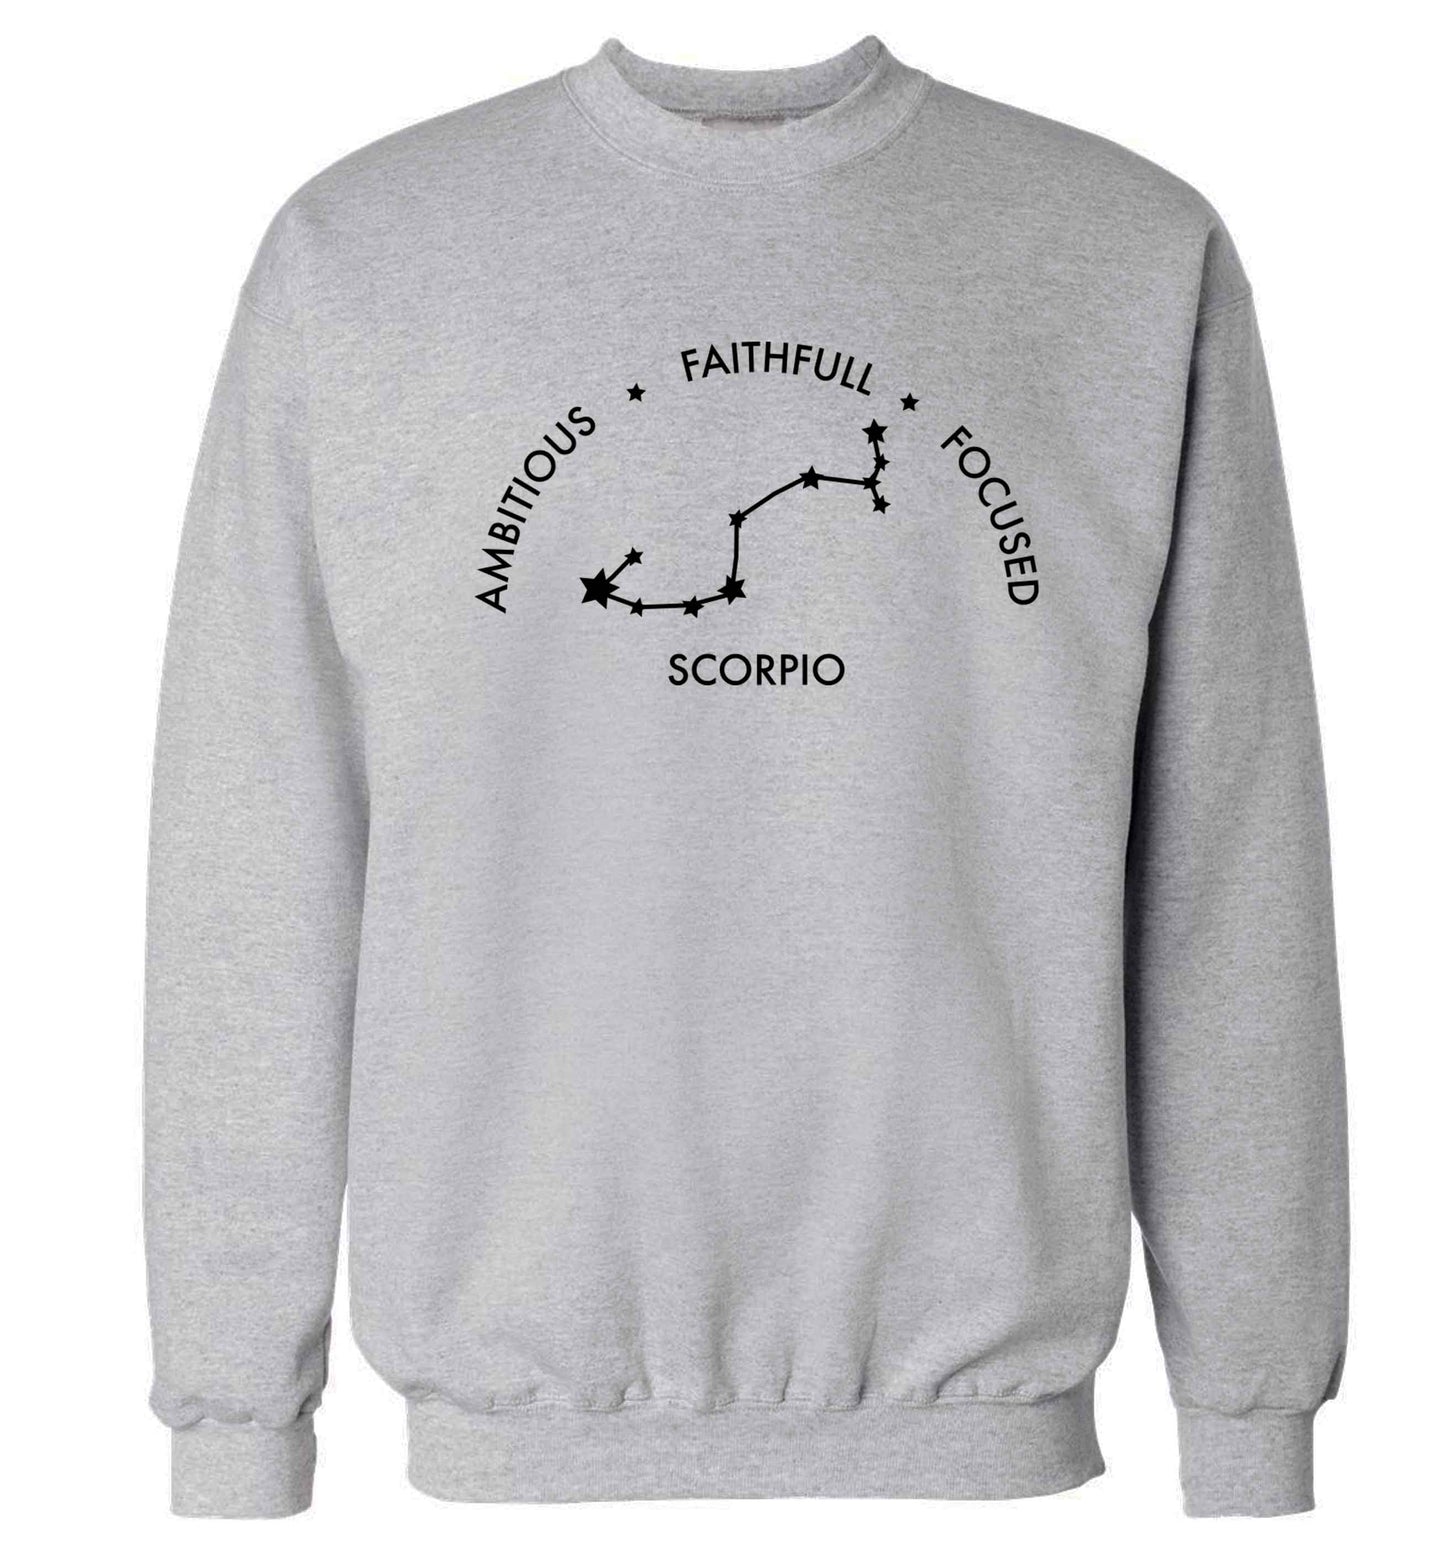 Scorpio, ambitious, faithfull, focused Adult's unisex grey Sweater 2XL